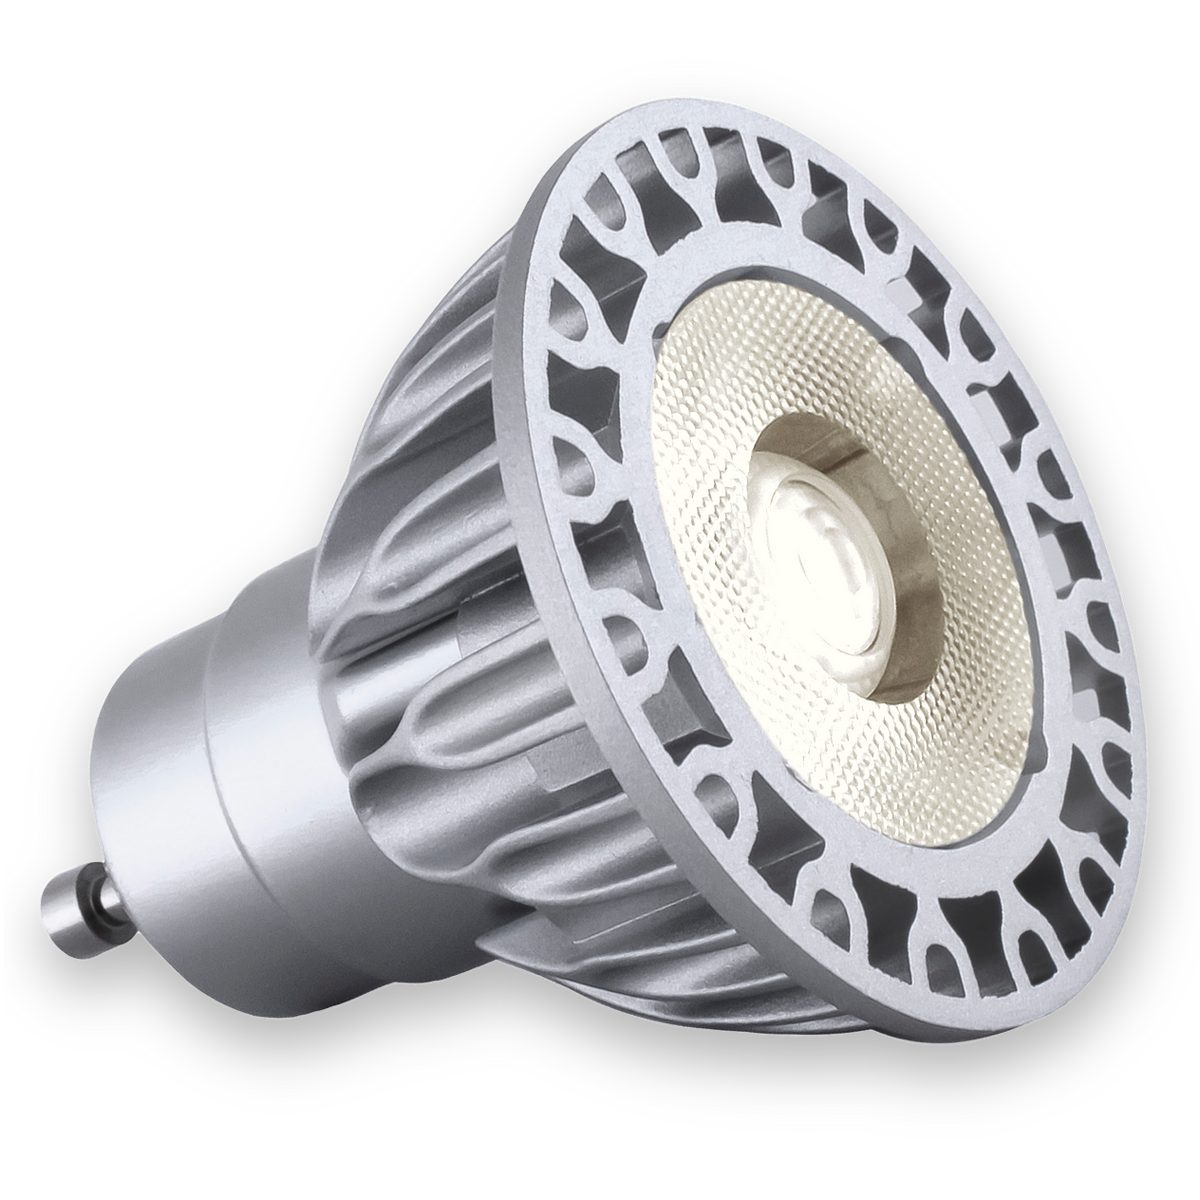 Soraa LED-Leuchtmittel Soraa Vivid 3 MR16 GU10 - Vollspektrum LED - 9Watt, 25°, GU10, Vollspektrum LED mit CRI 95 R9 - dimmbar